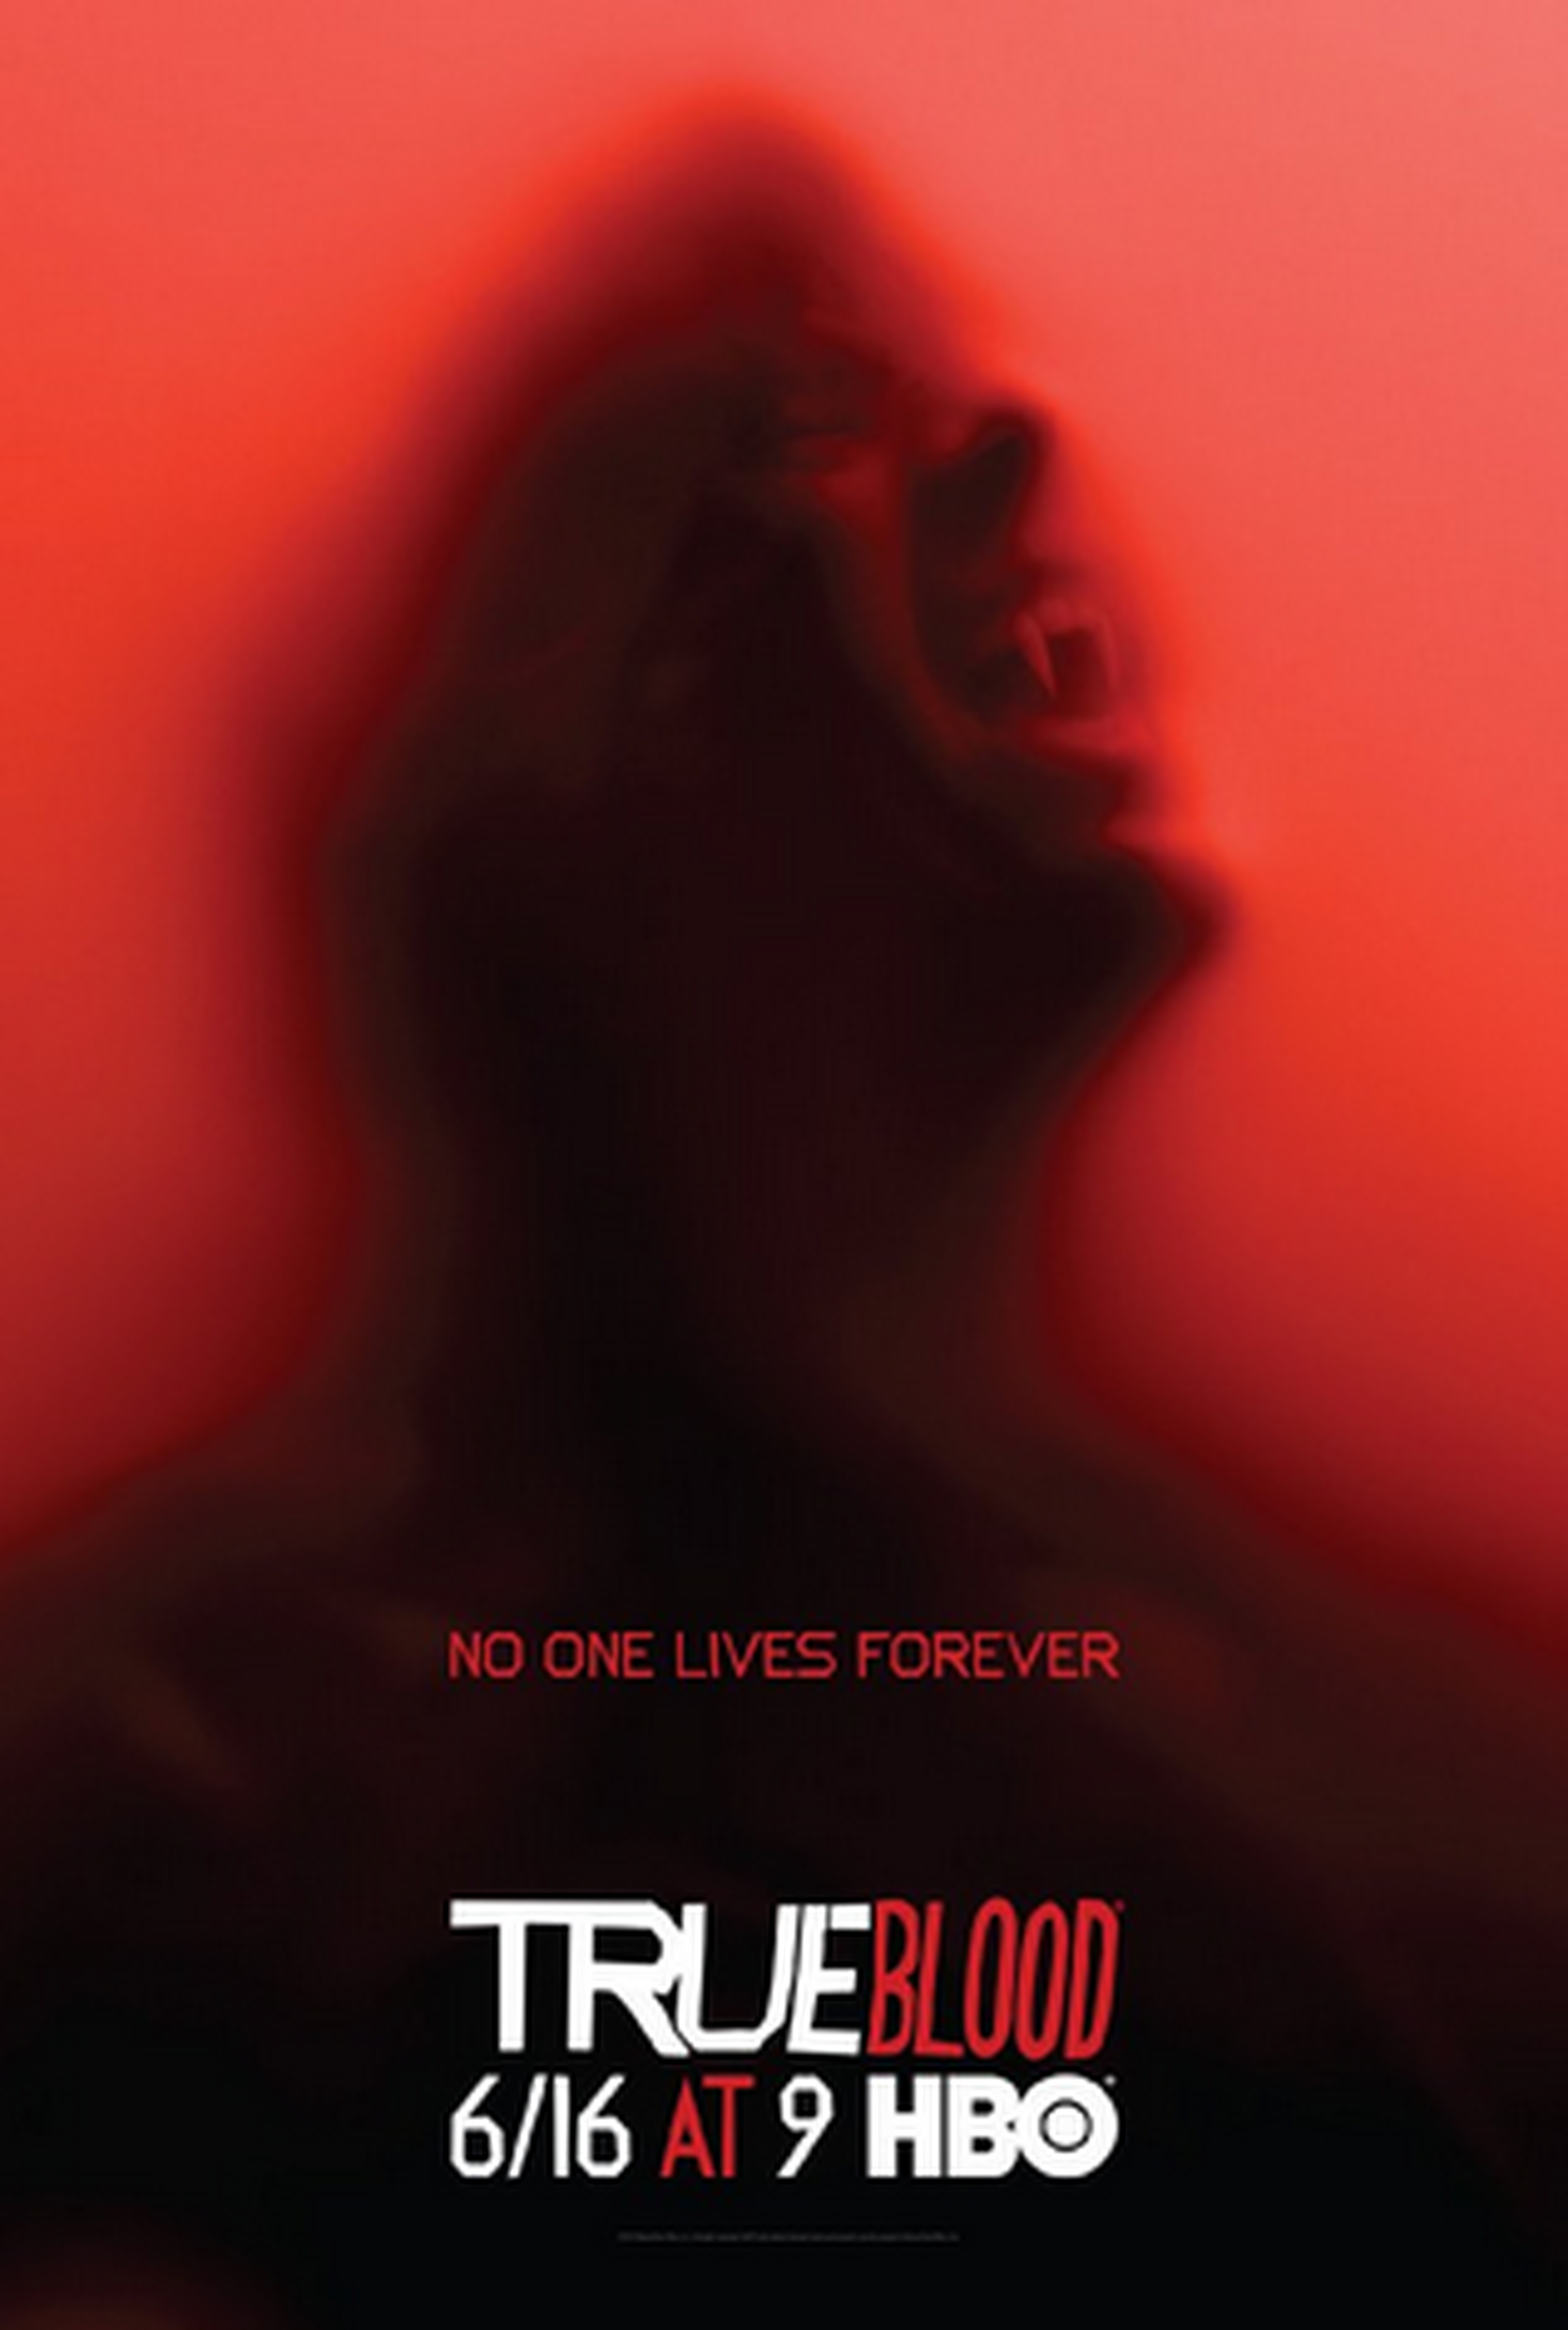 La 6ª temporada de True Blood arranca la próxima semana